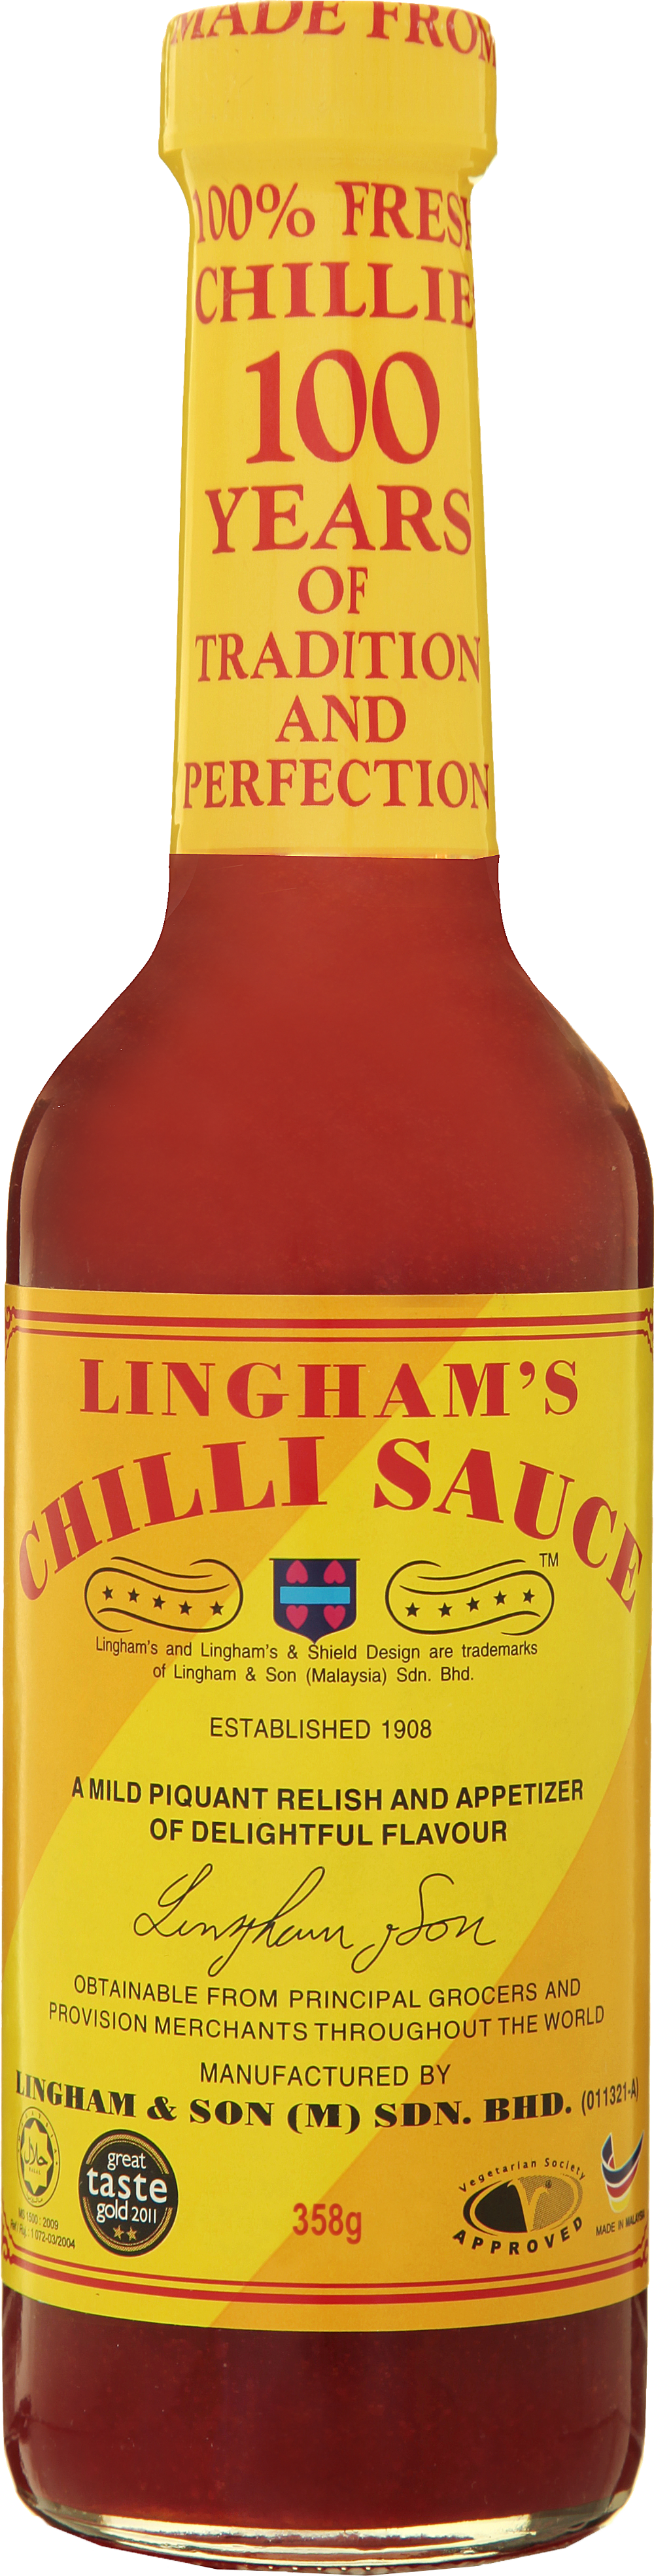 LINGHAMS Chilli Sauce 358g